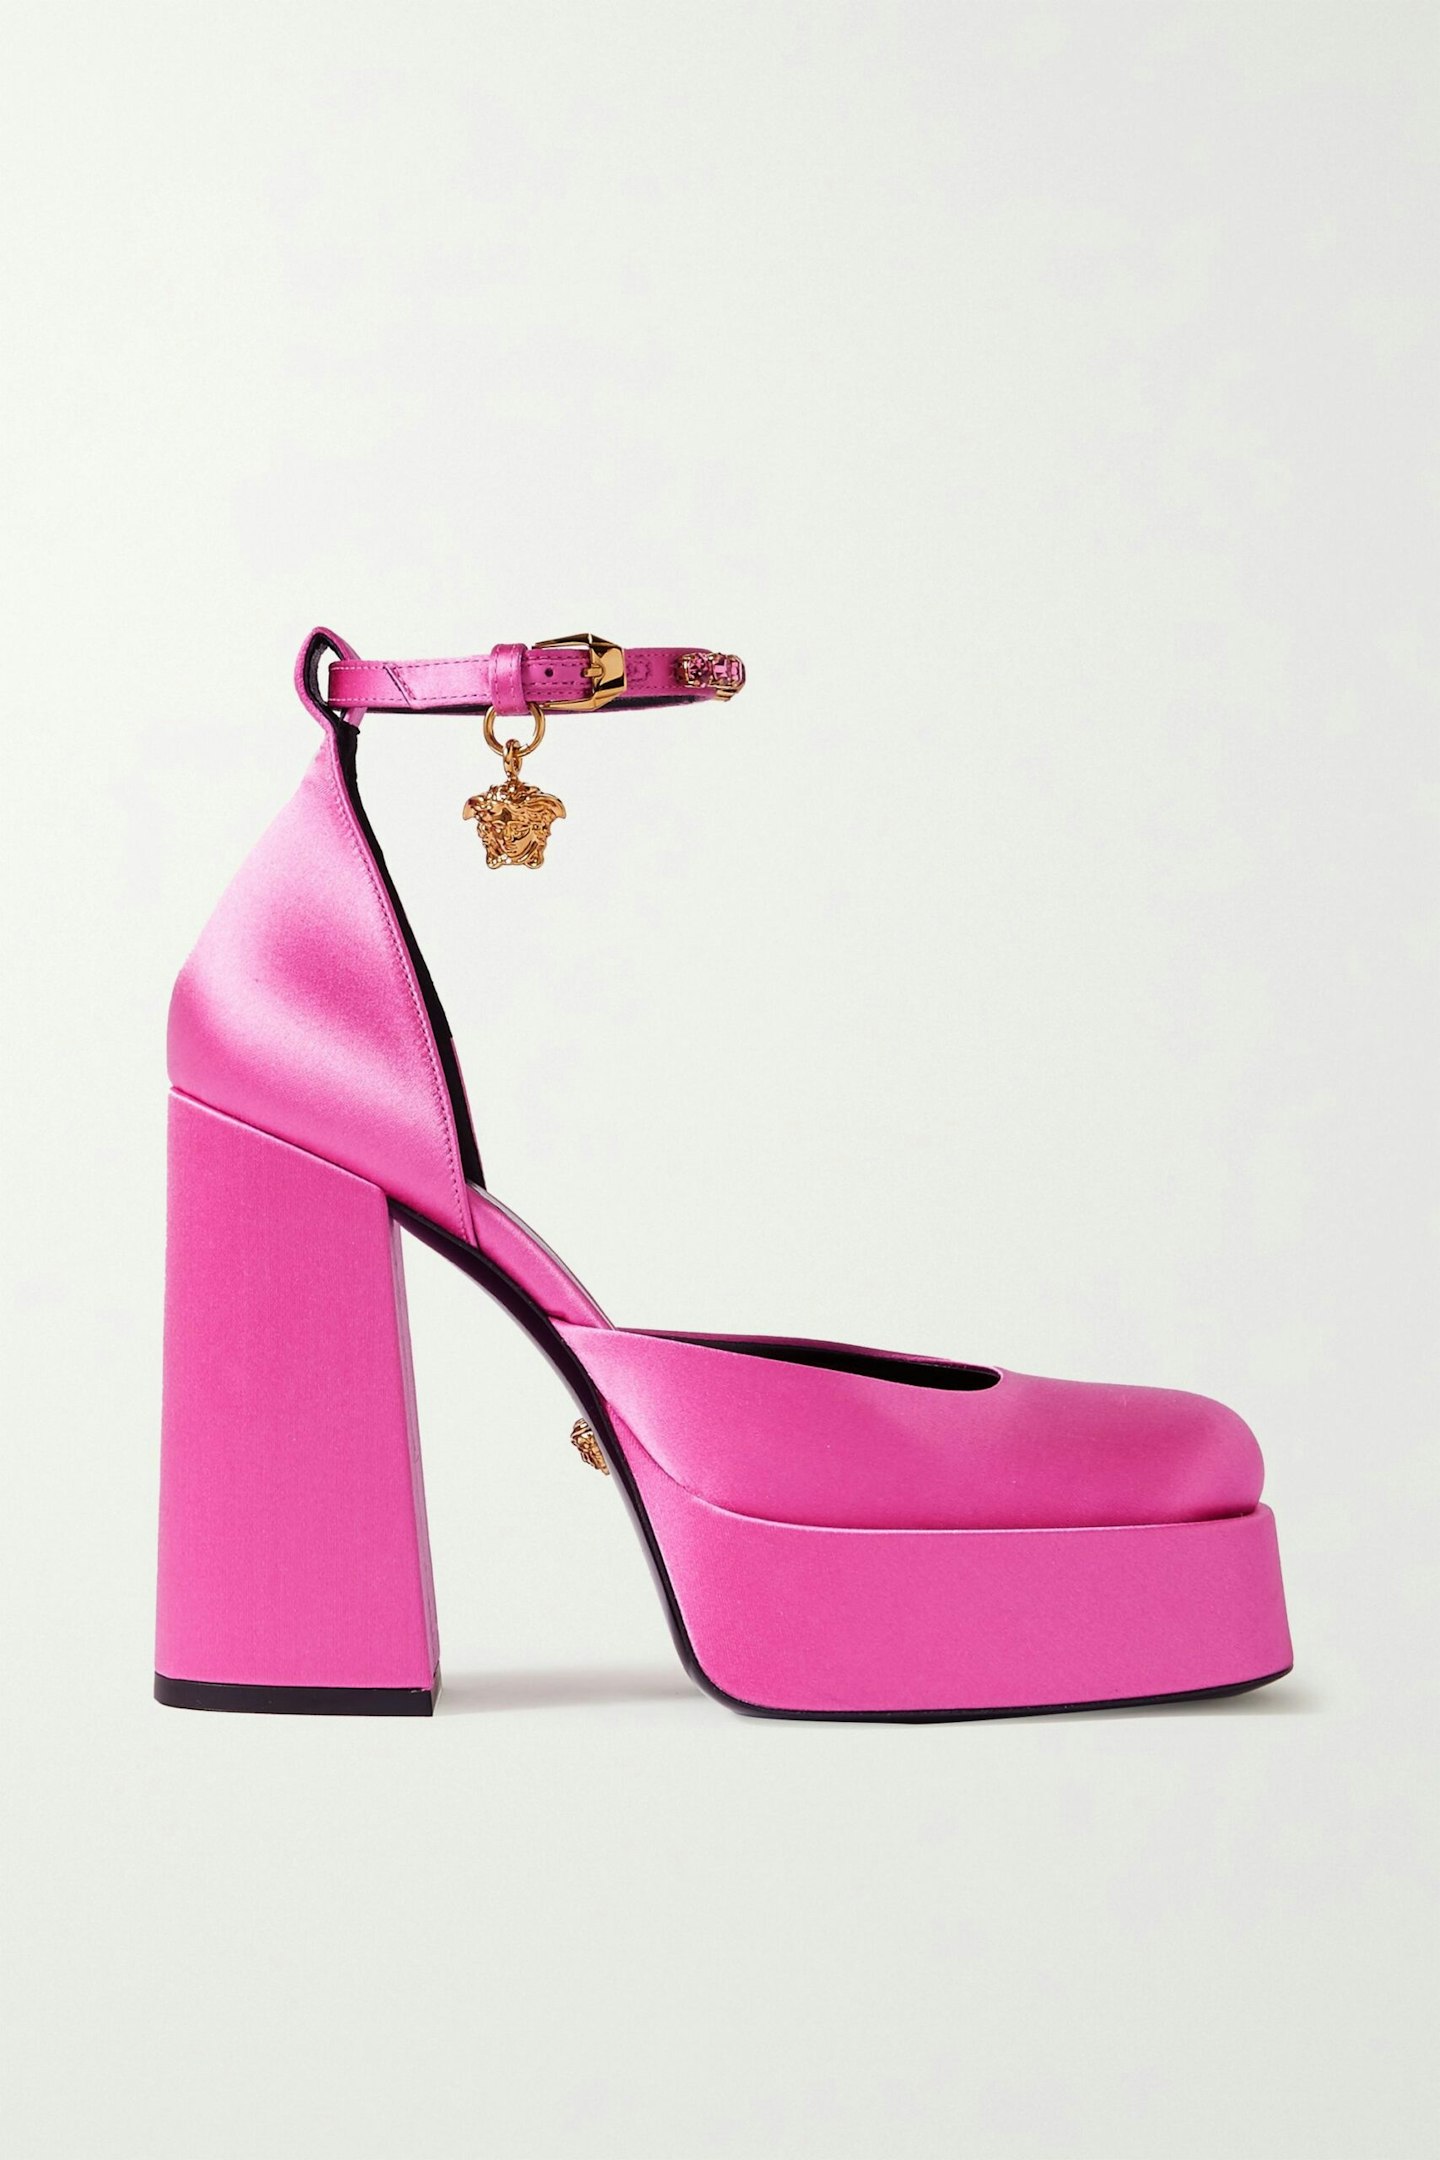 versace heels net a porter sale